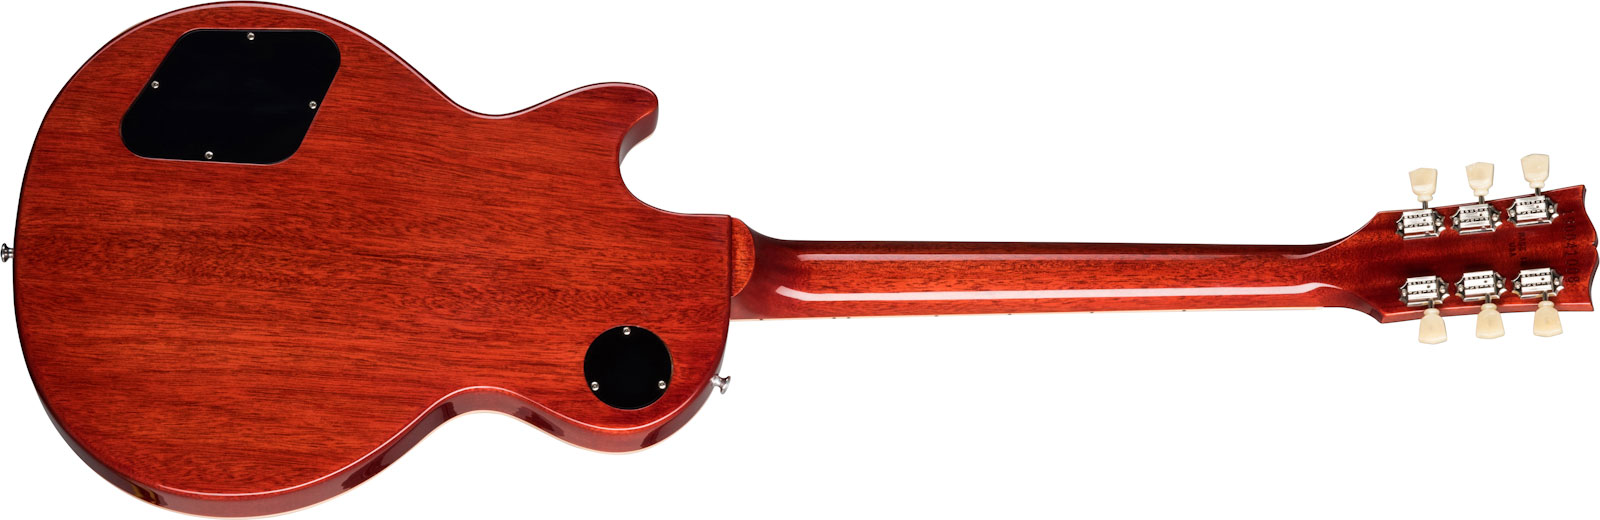 Gibson Les Paul Standard 50s 2h Ht Rw - Heritage Cherry Sunburst - Guitarra eléctrica de corte único. - Variation 4